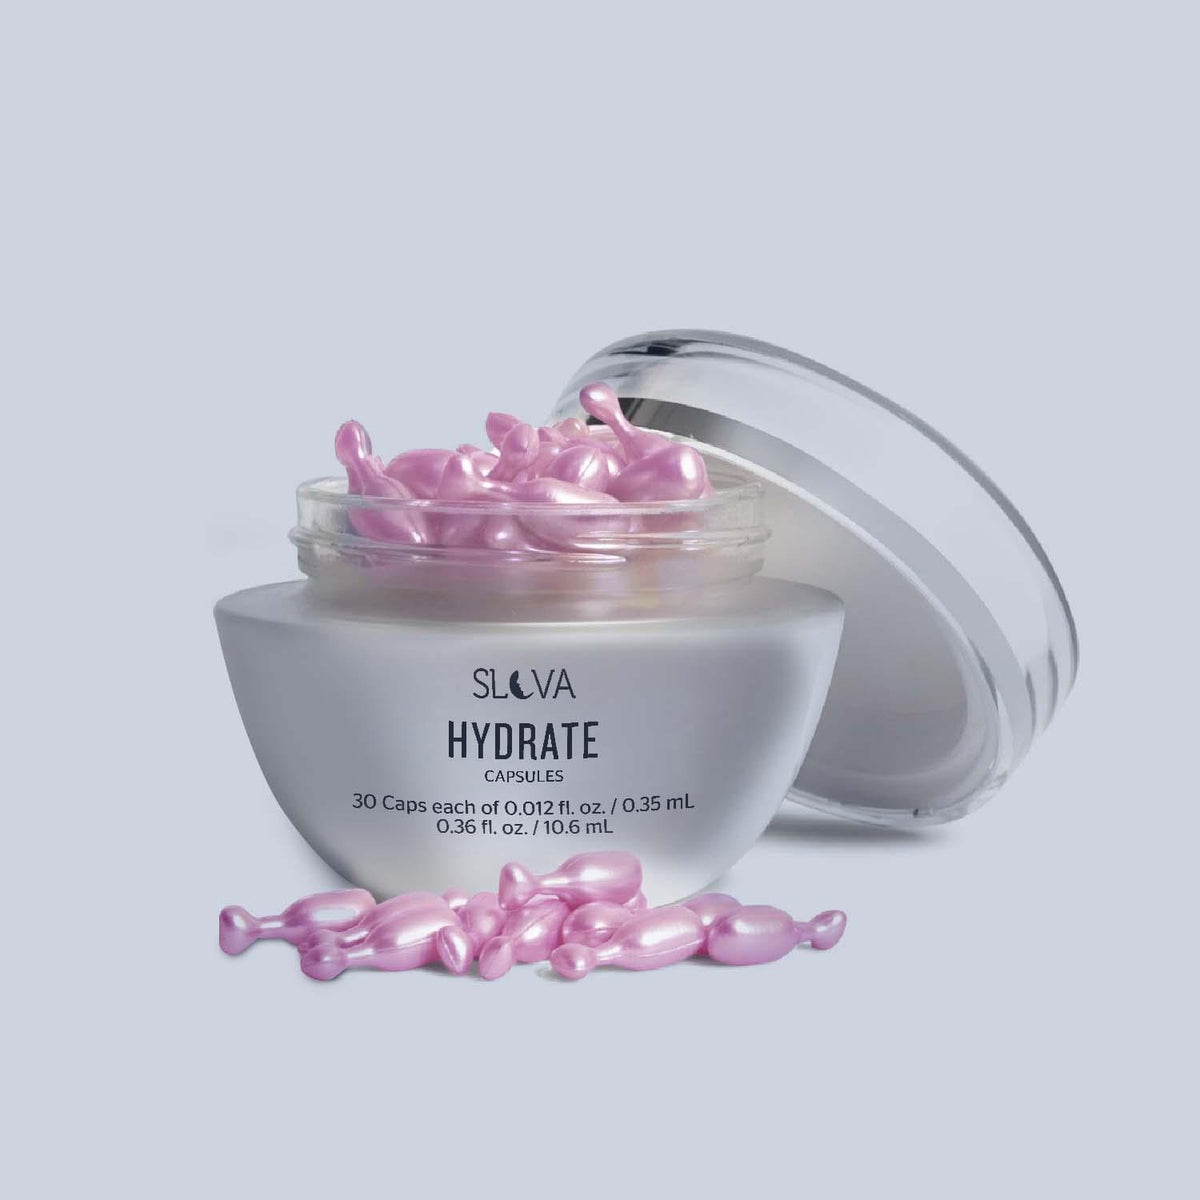 HYDRATE INTENSE HYDRATING HYALURONIC ACID SERUM CAPSULES - Slova Cosmetics